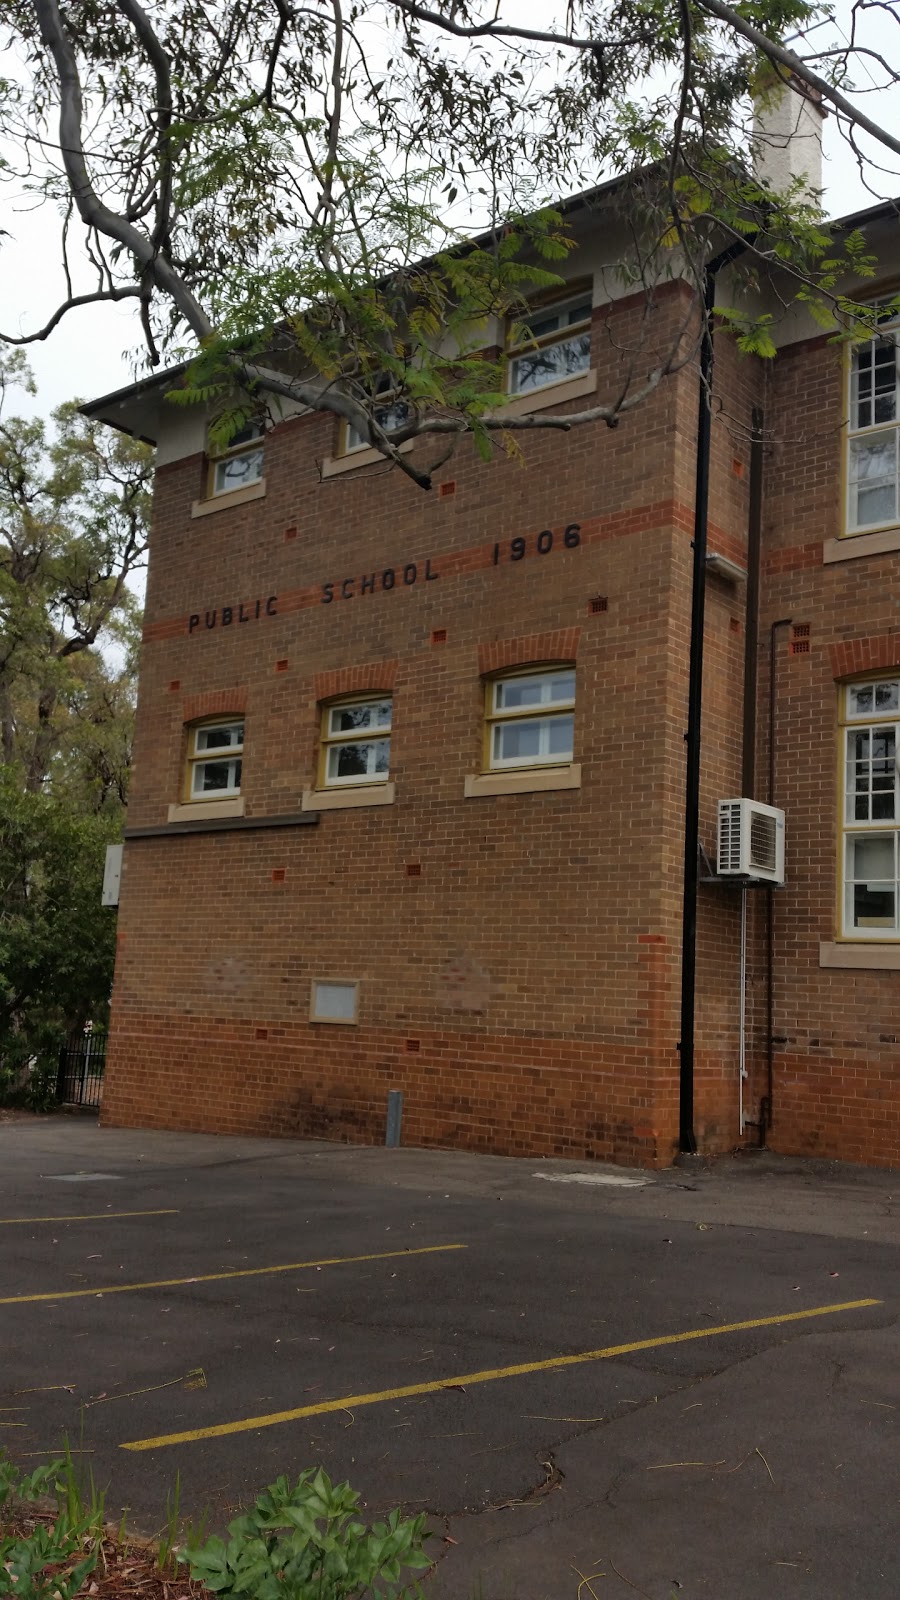 Warrawee Public School | school | 1486 Pacific Hwy, Turramurra NSW 2074, Australia | 0291445952 OR +61 2 9144 5952